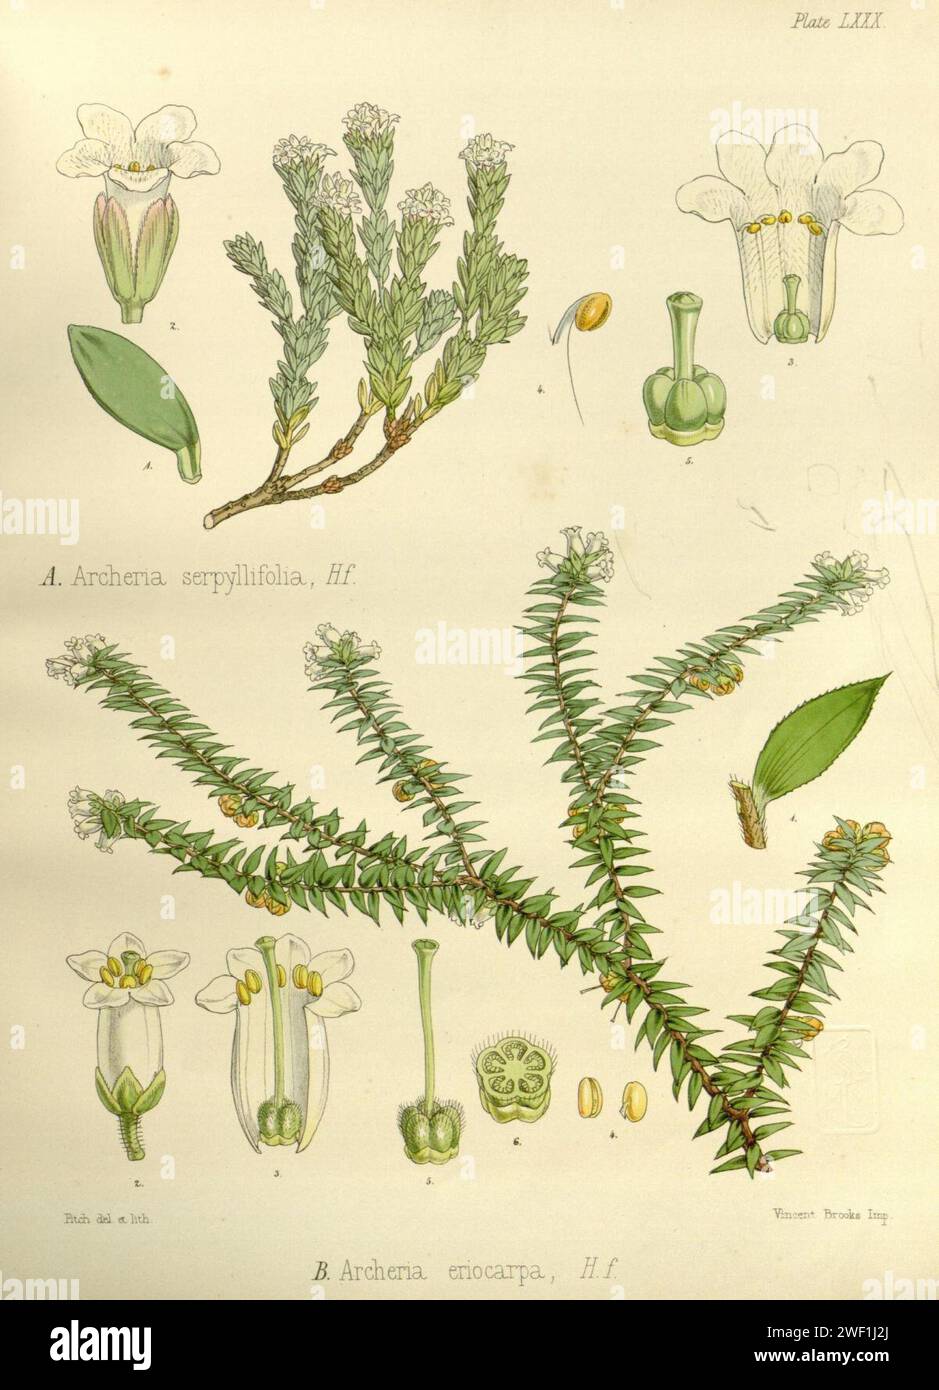 Archeria eriocarpa & Archeria serpyllifolia. Stock Photo